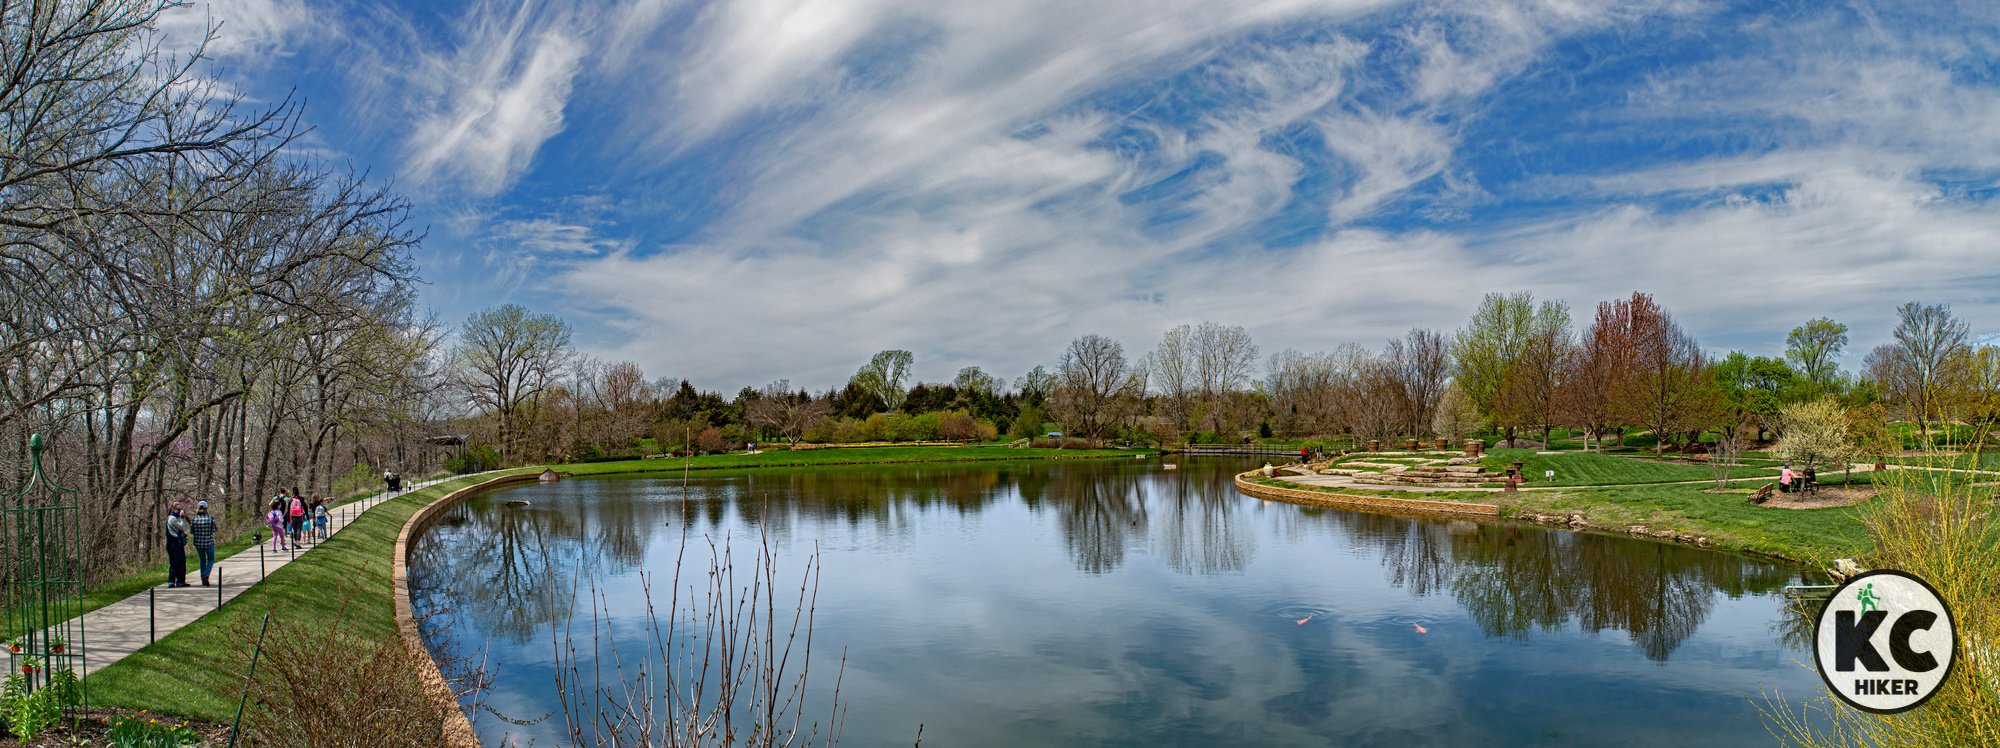 Overland Park Arboretum is home to top-notch trails - KC Hiker